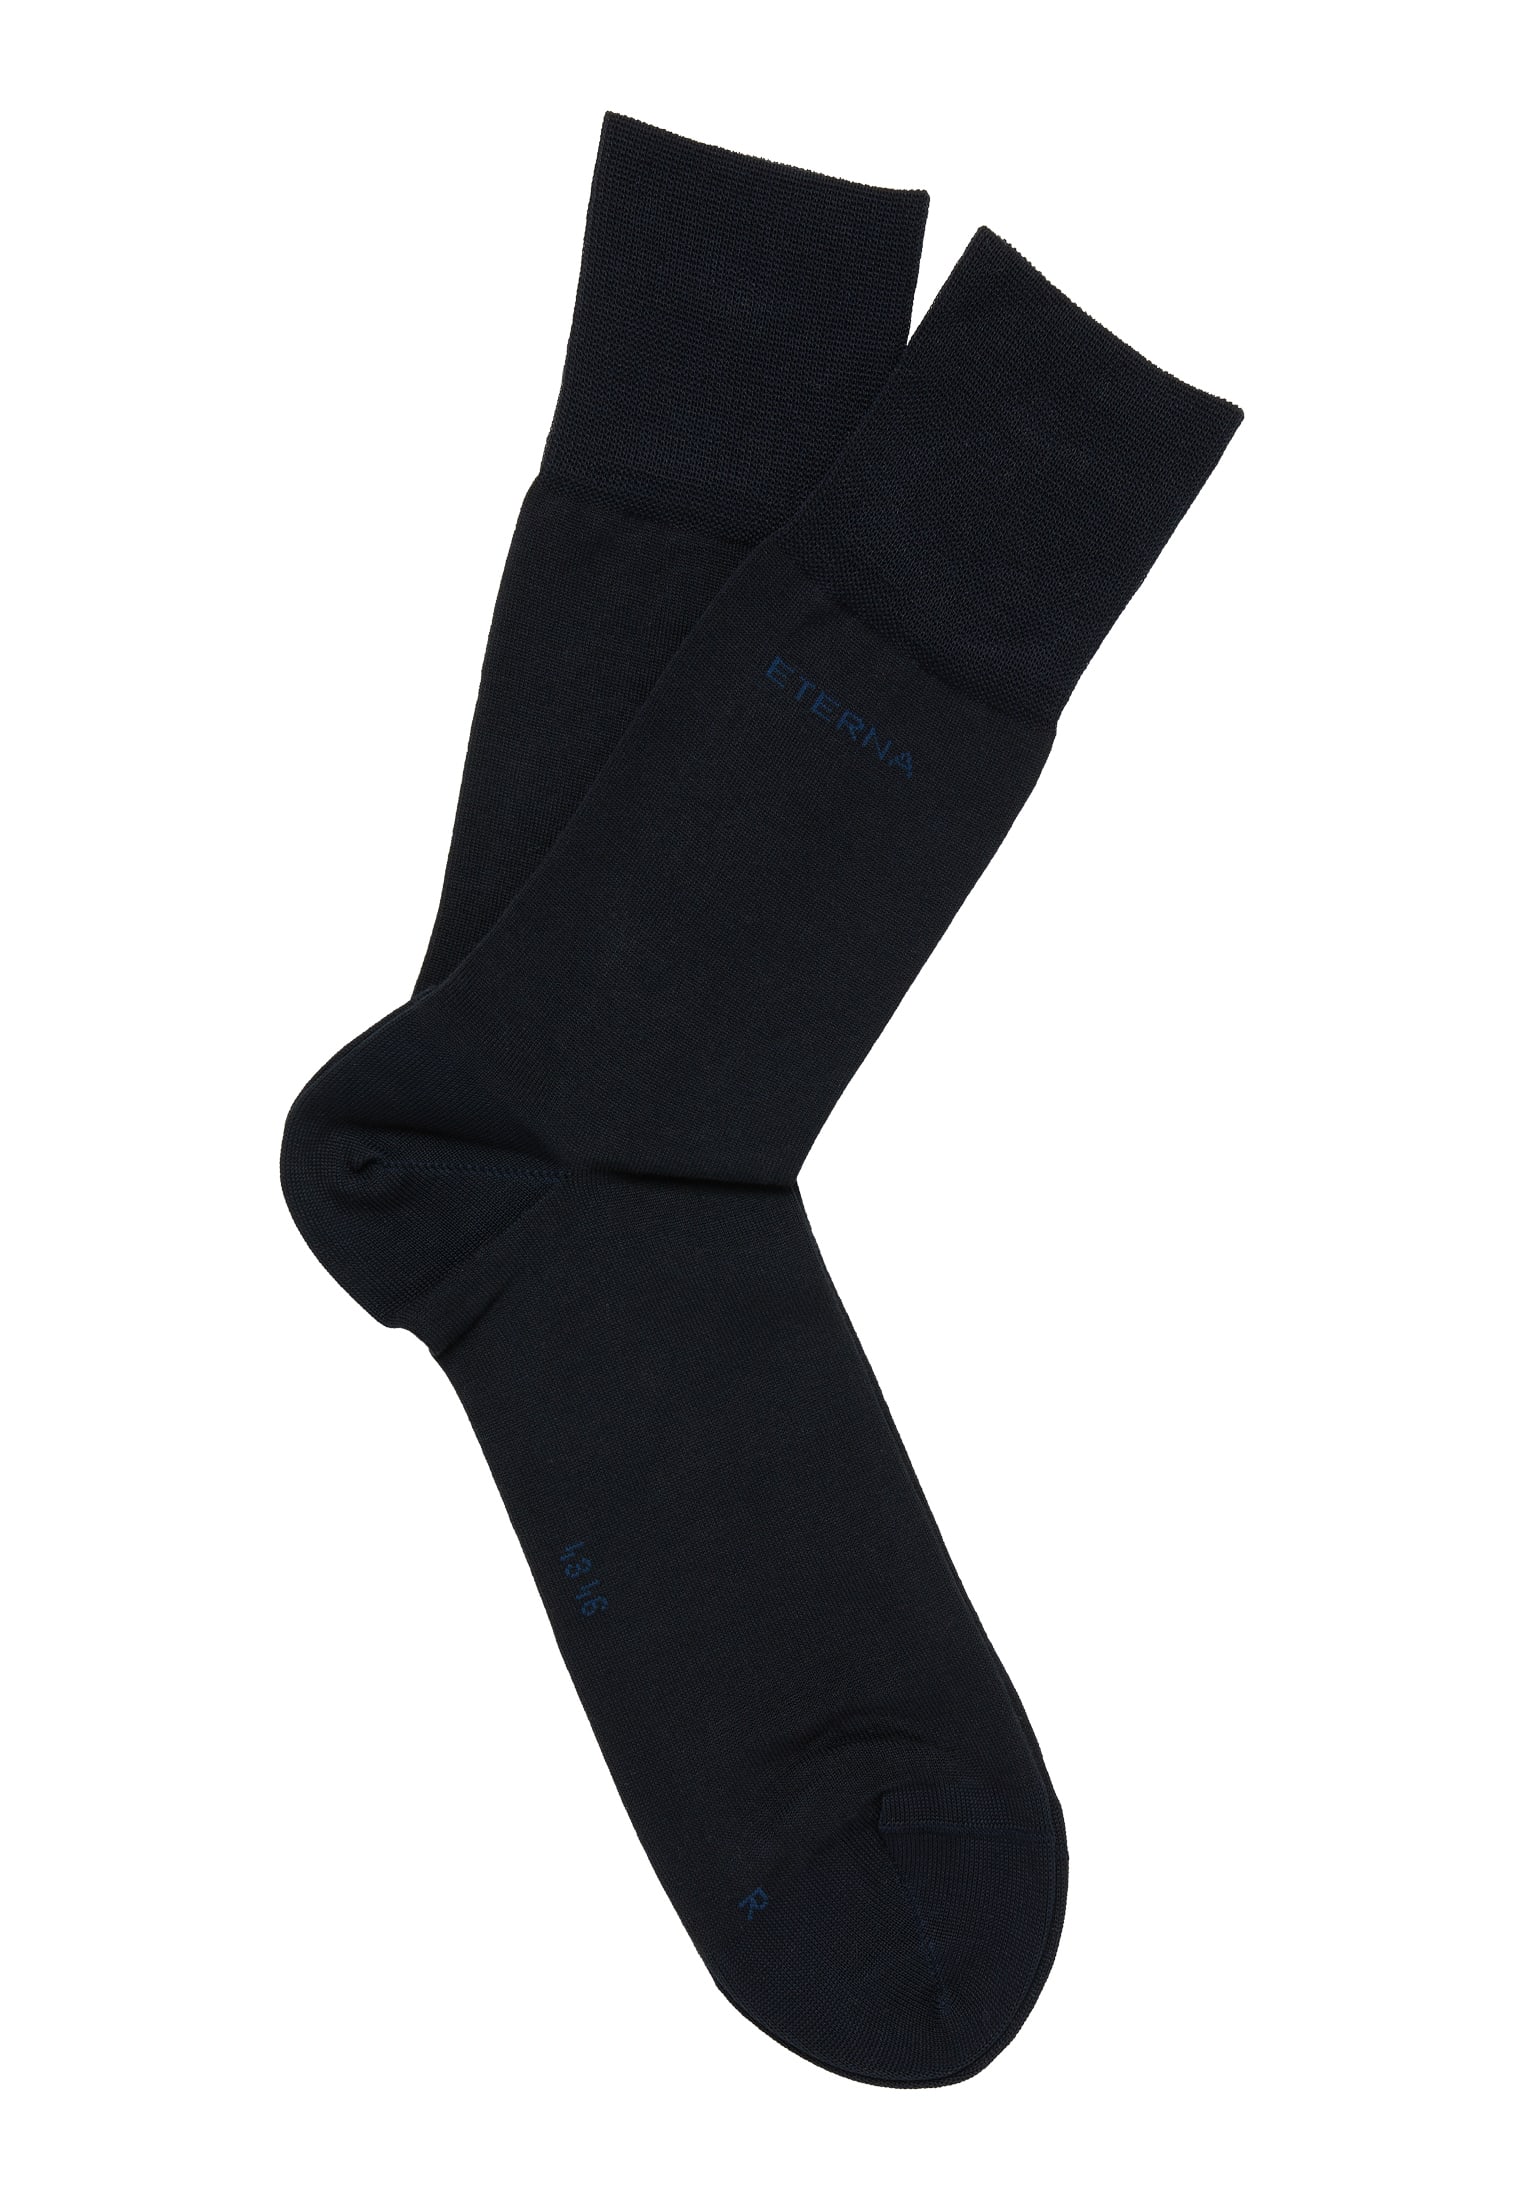 Socken in navy unifarben | | 43-46 | navy 1AC00926-01-91-43-46